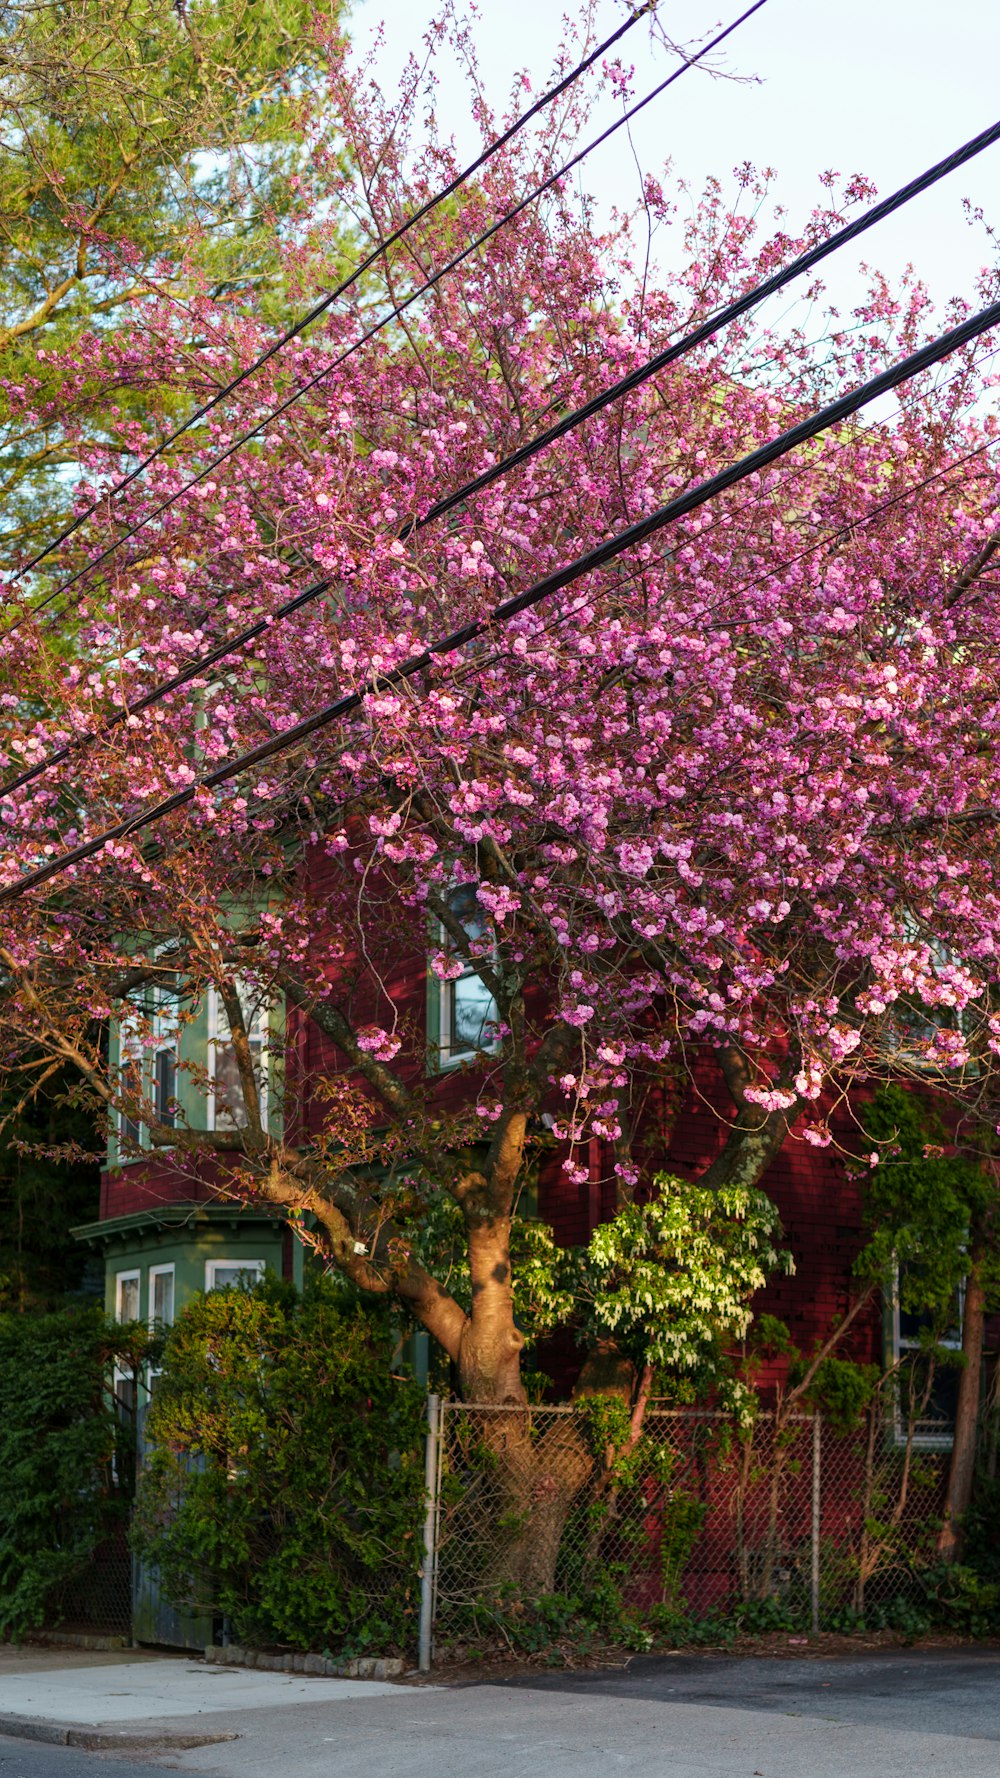 Árbol de flor de cerezo rosa cerca de White House durante el día